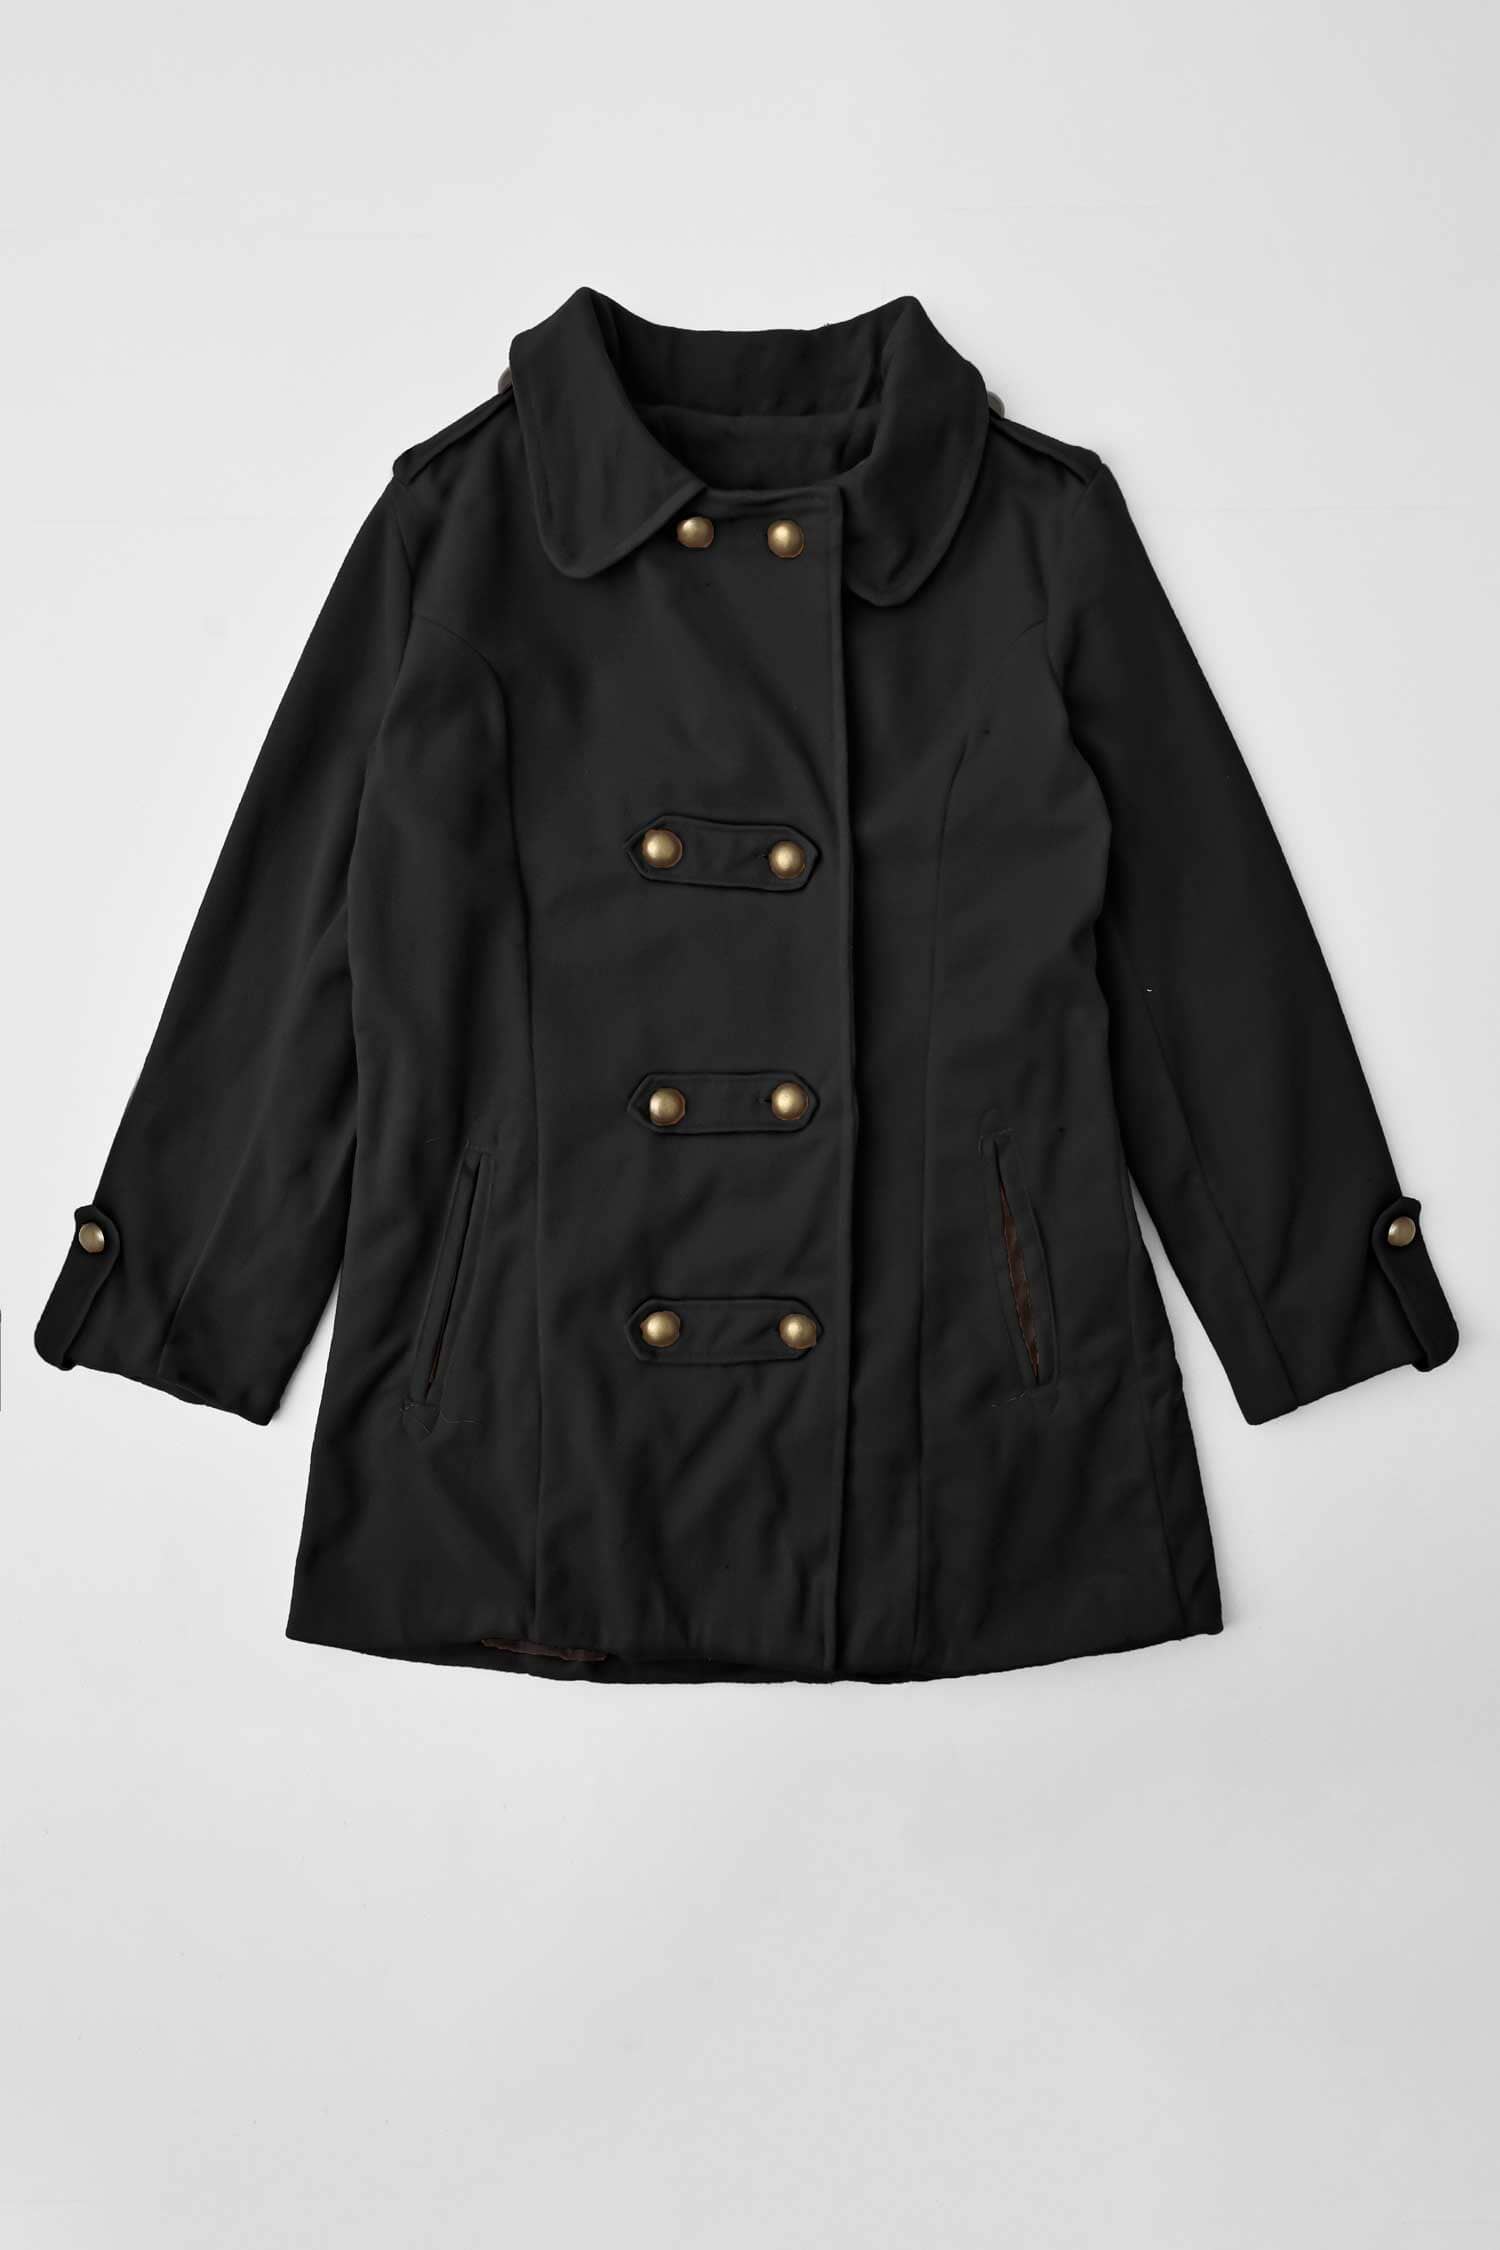 Women's Winter Outwear British Style Long Coat Women's Jacket First Choice 